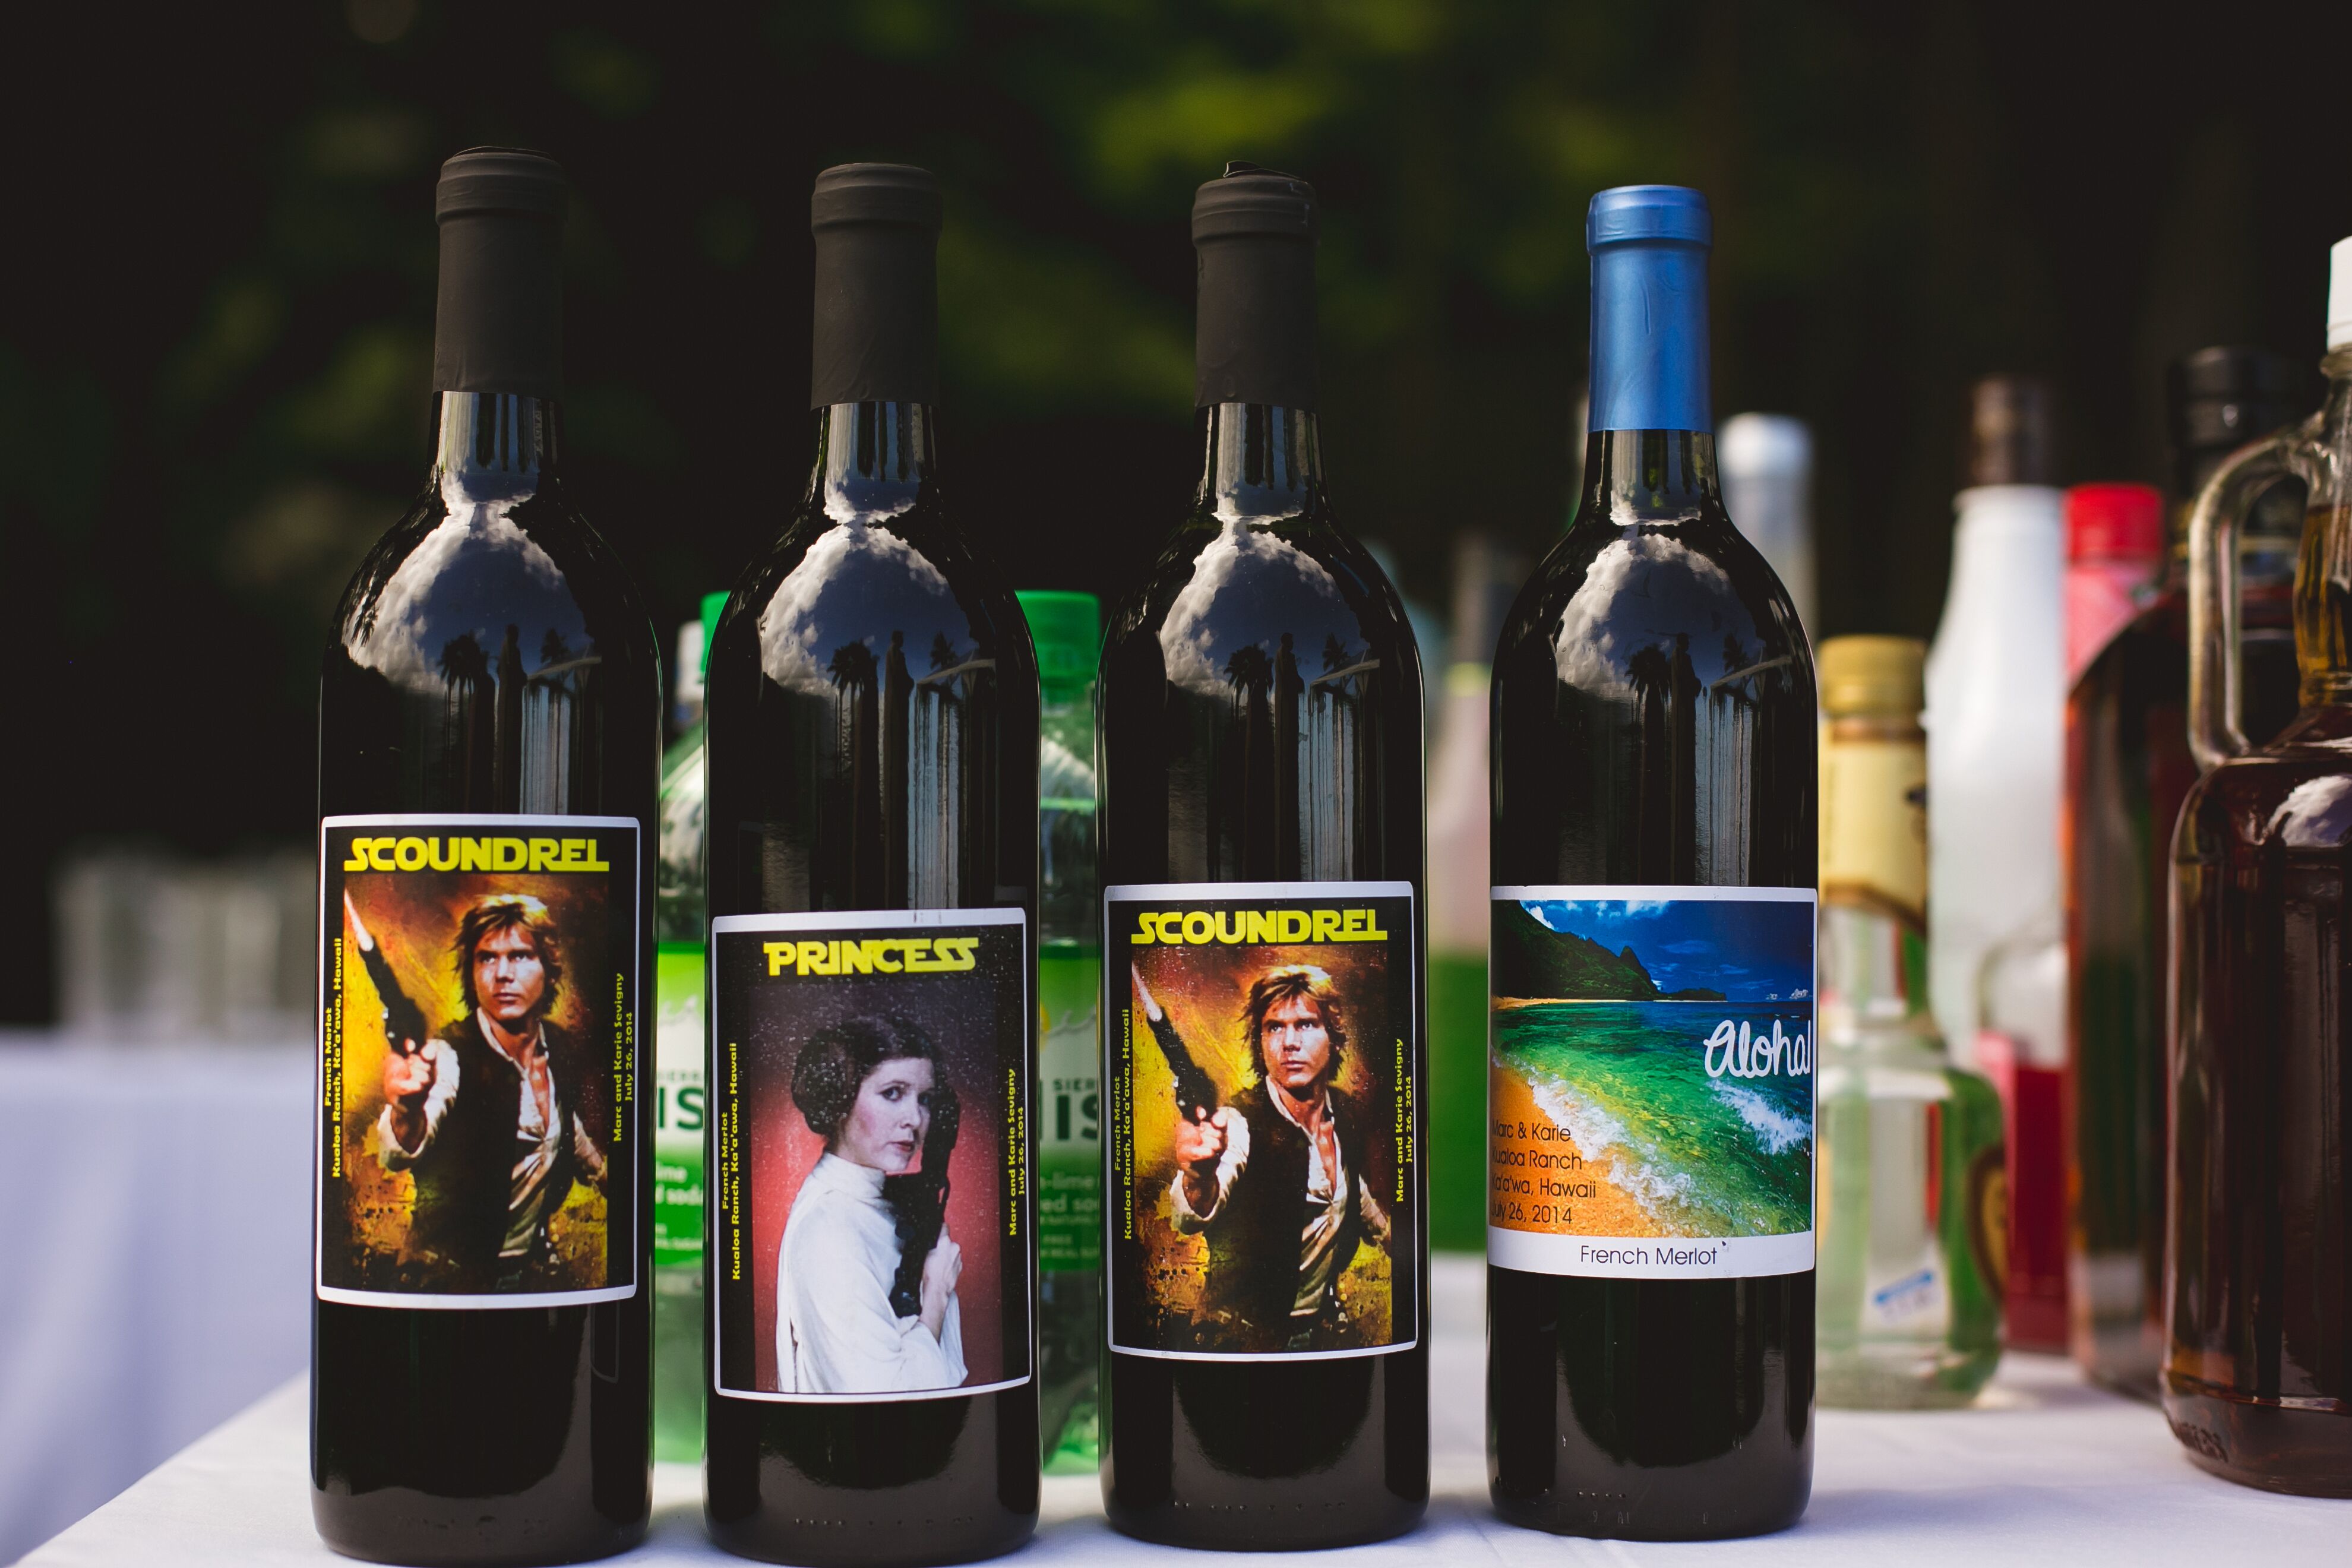 Download "Star Wars" Themed Wine Bottle Labels